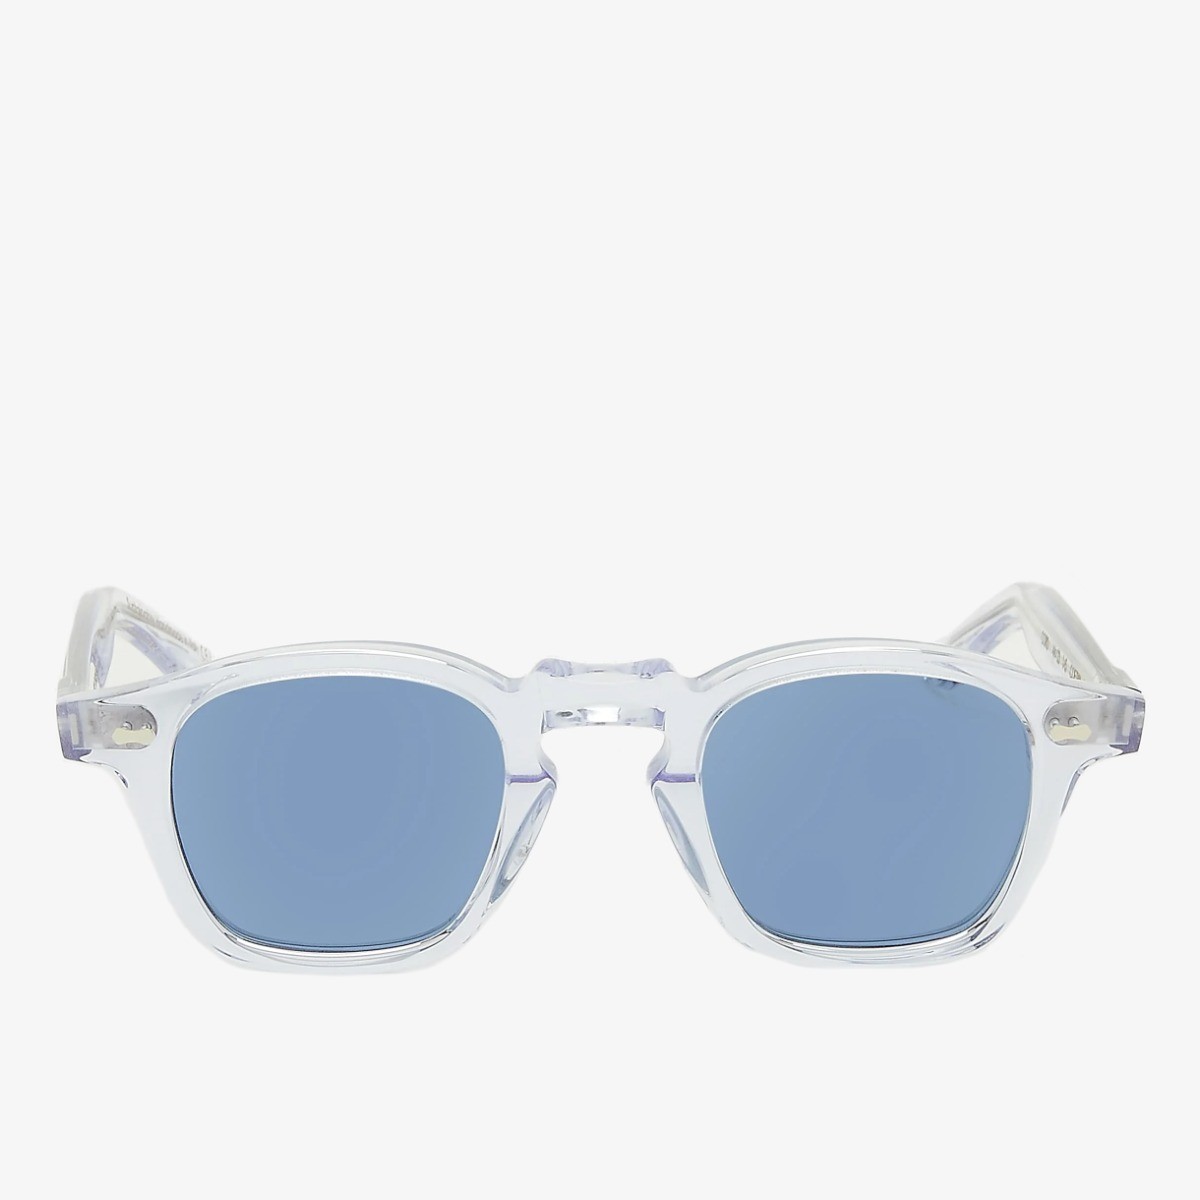 TBD Eyewear Cord transparent frame blue lenses sunglasses